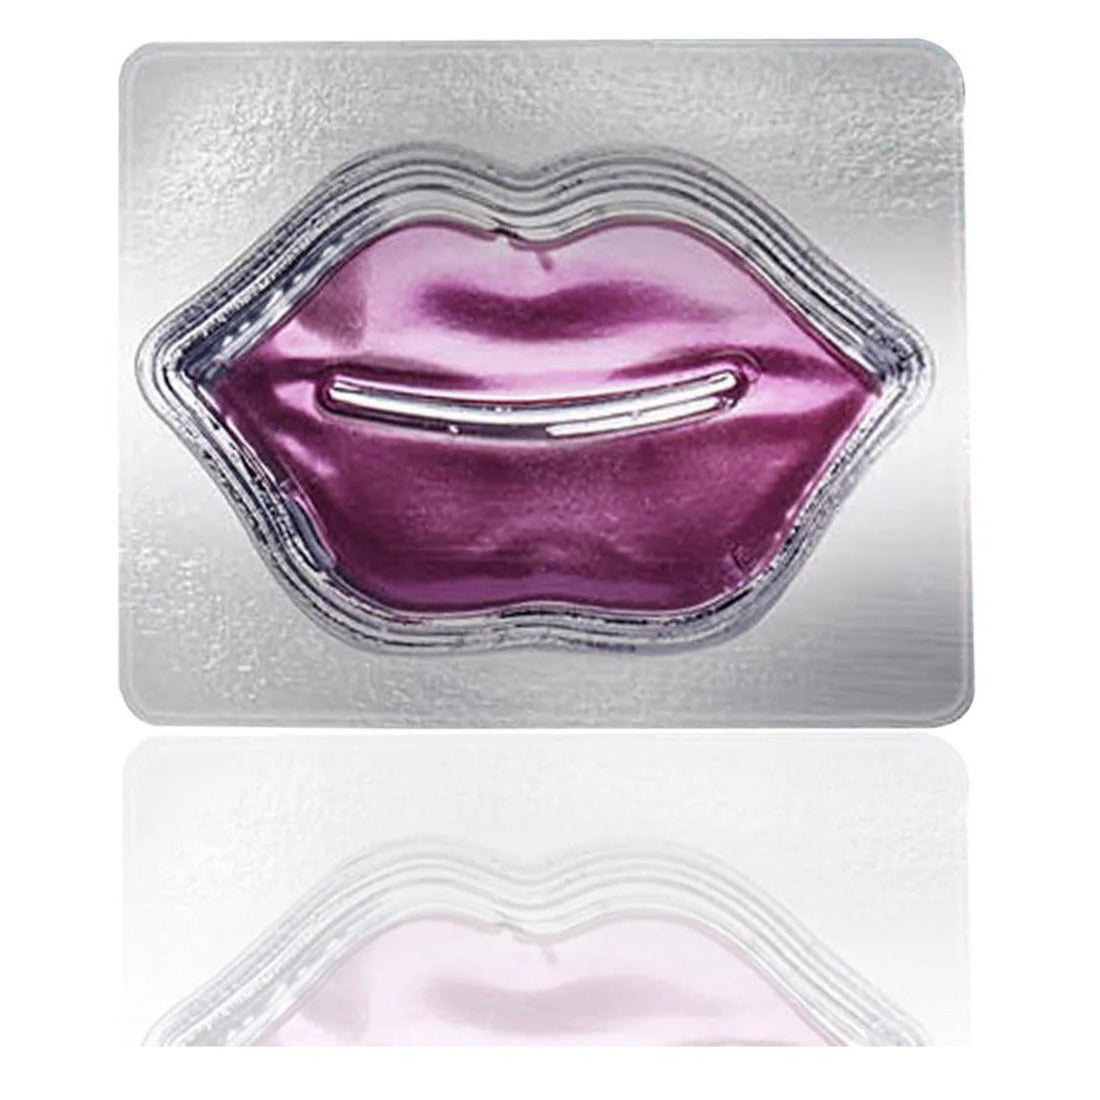 CHERRY KISS LIP MASK SHEET - LUSCIOUS ANTIOXIDANT TREATMENT